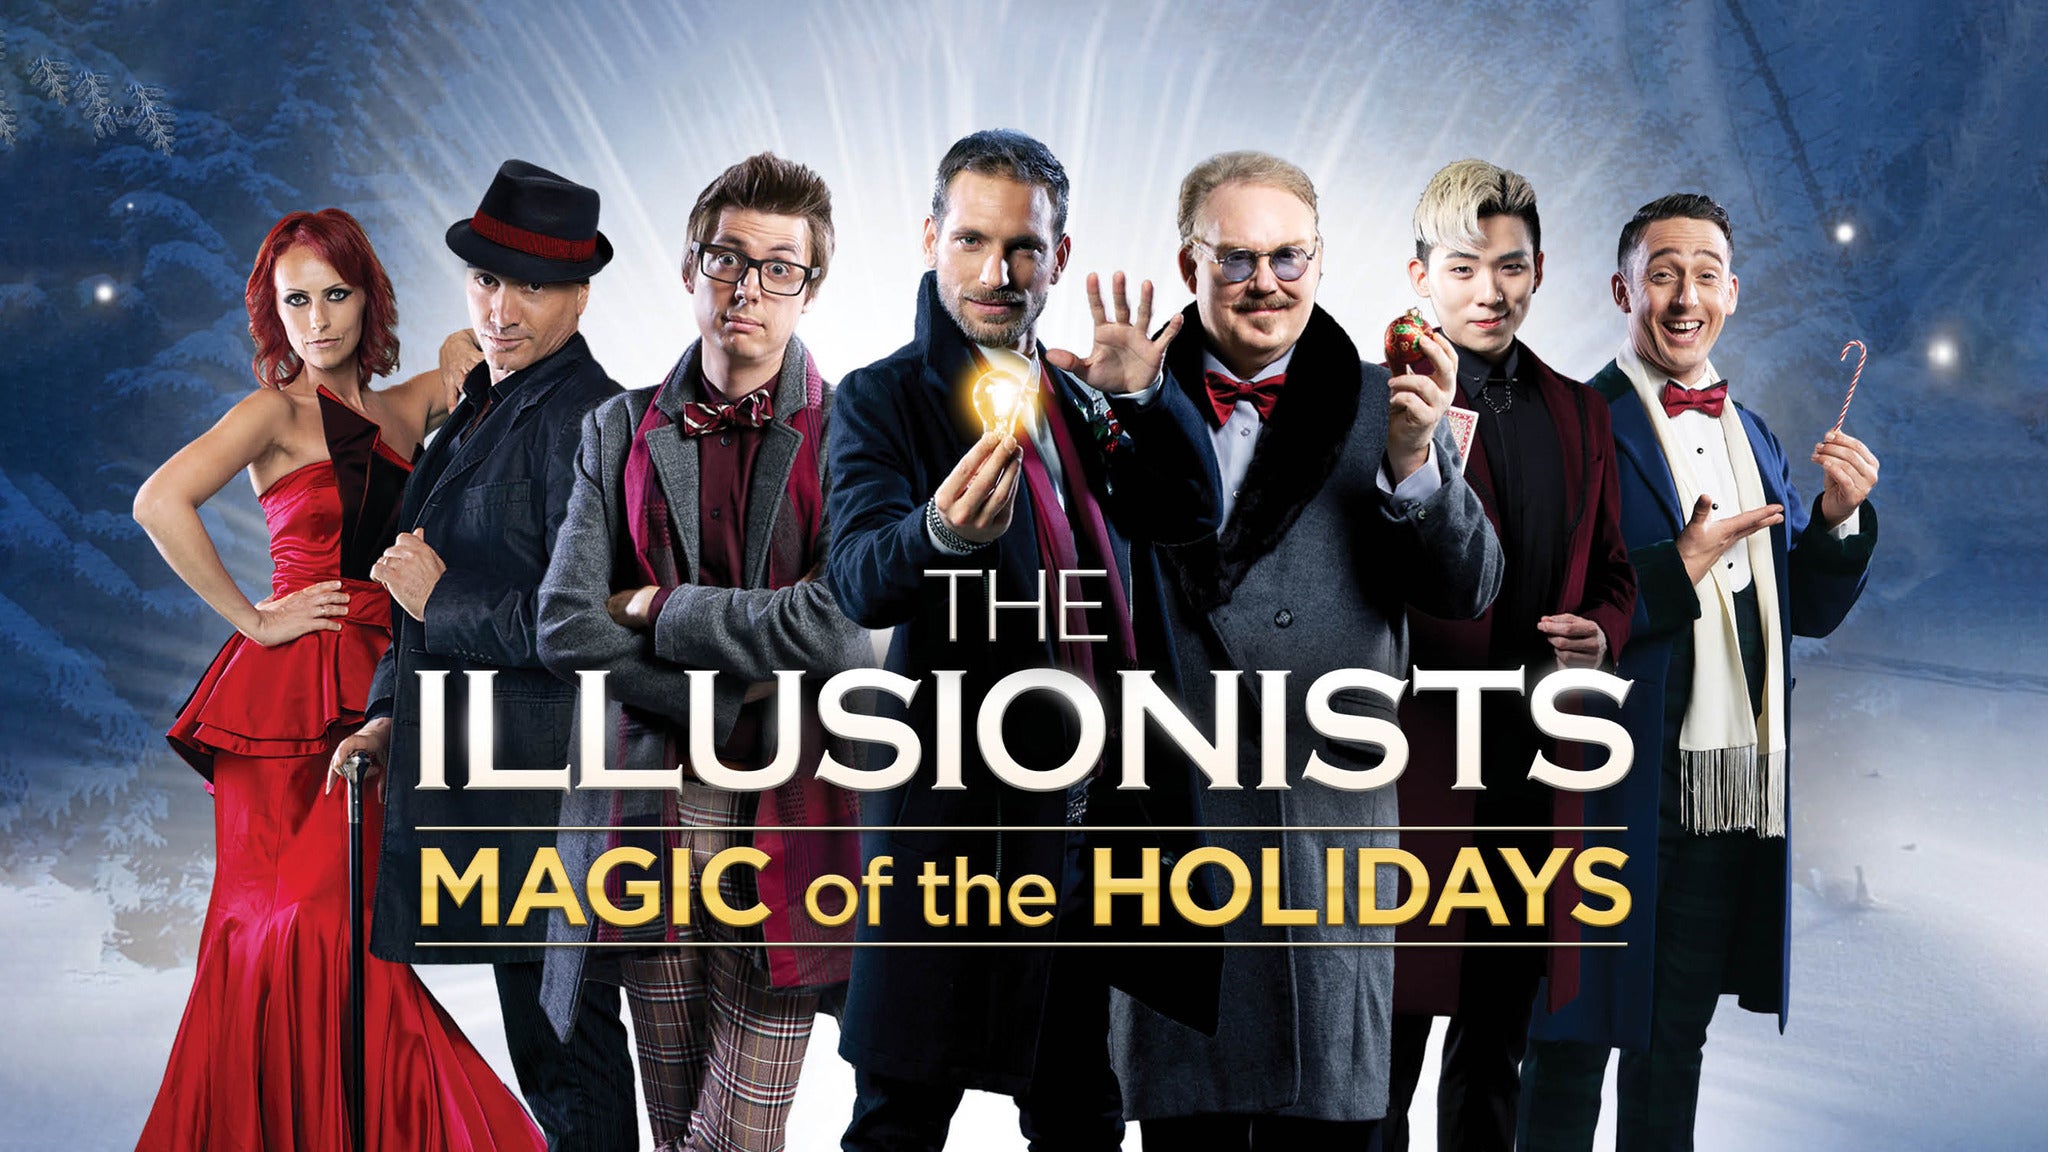 The Illusionists - Magic of the Holidays (NY) presale information on freepresalepasswords.com